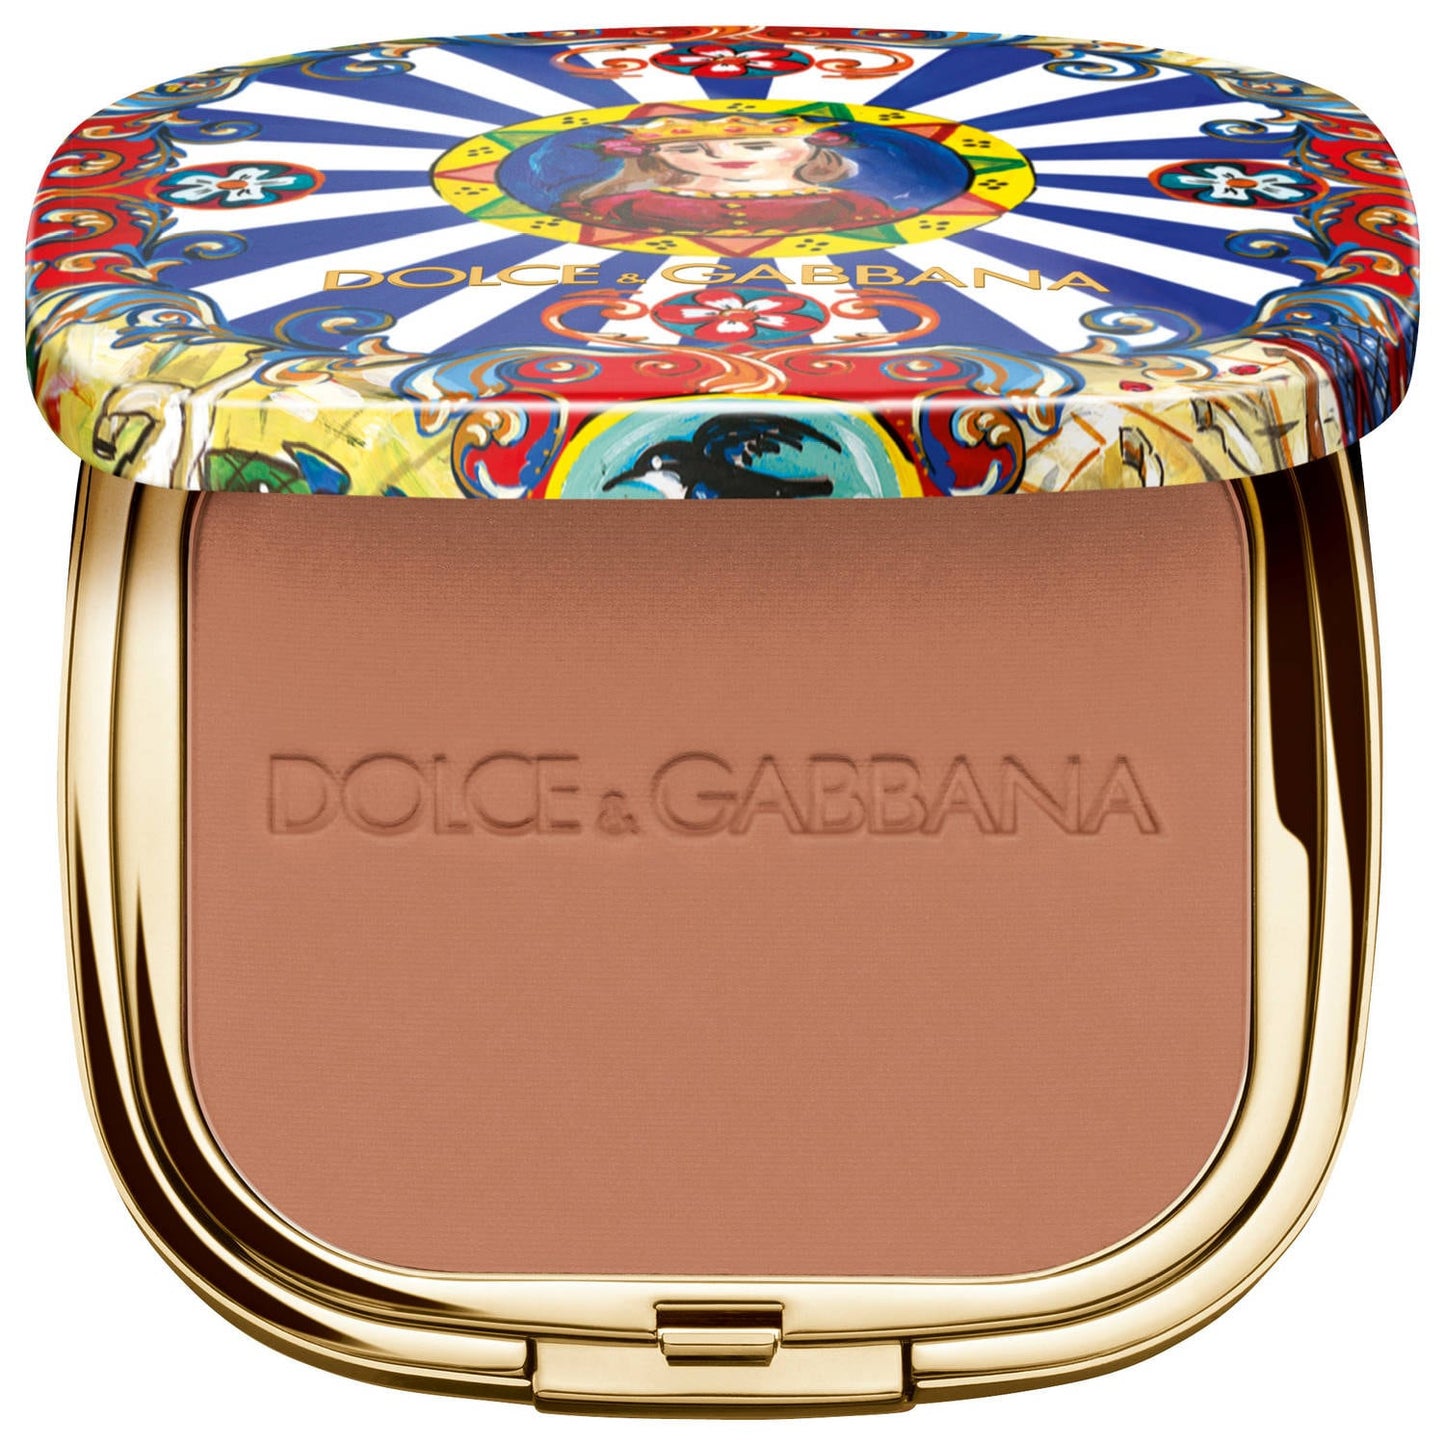 Dolce & Gabbana SOLAR GLOW Ultra-Light Bronzing Powder